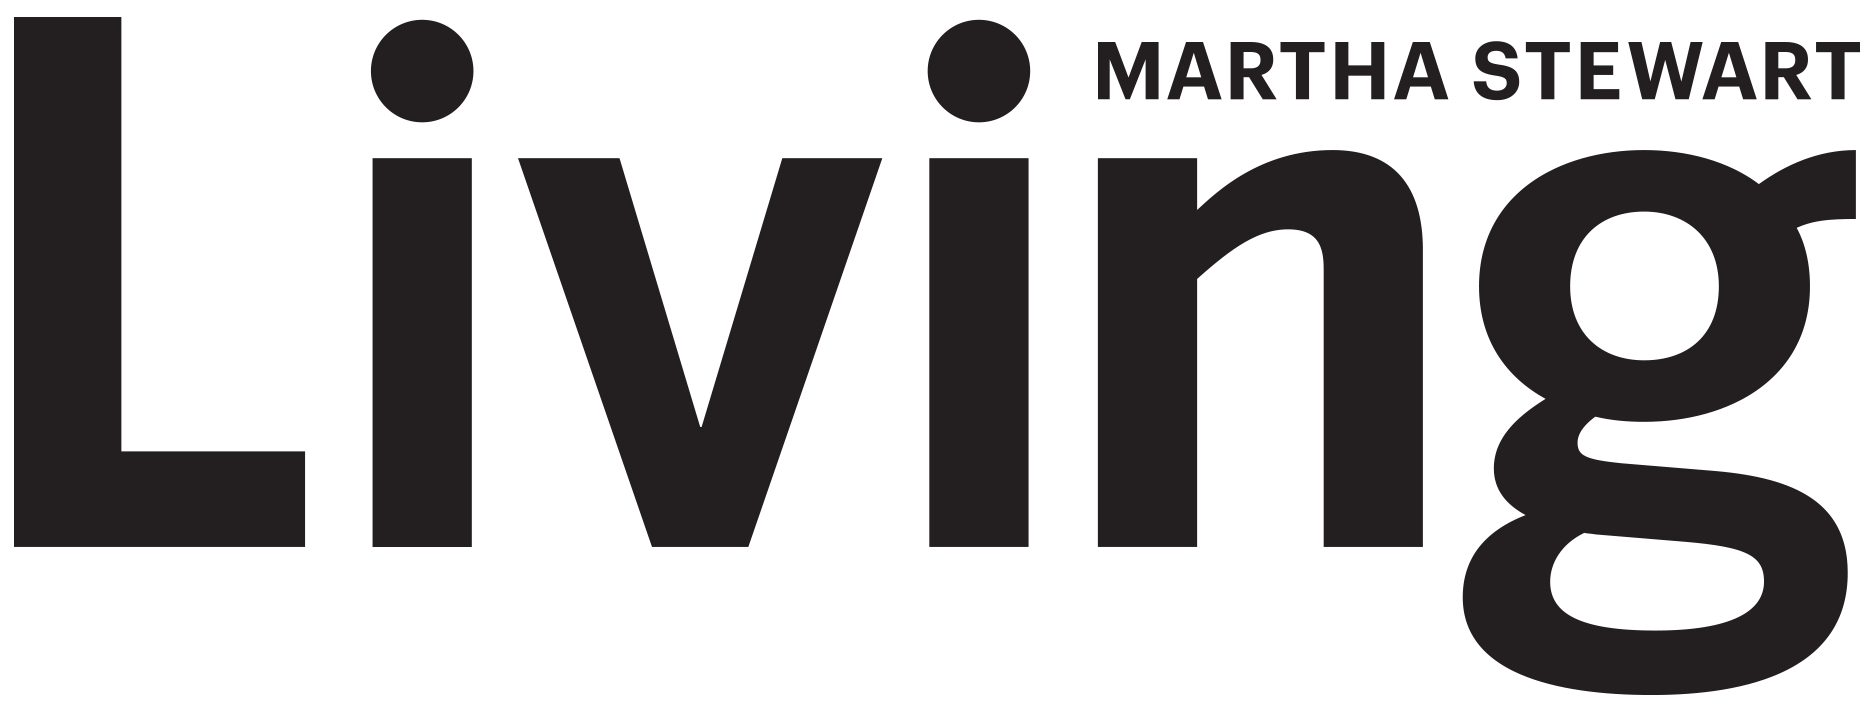 Martha Stewart Logo | Press